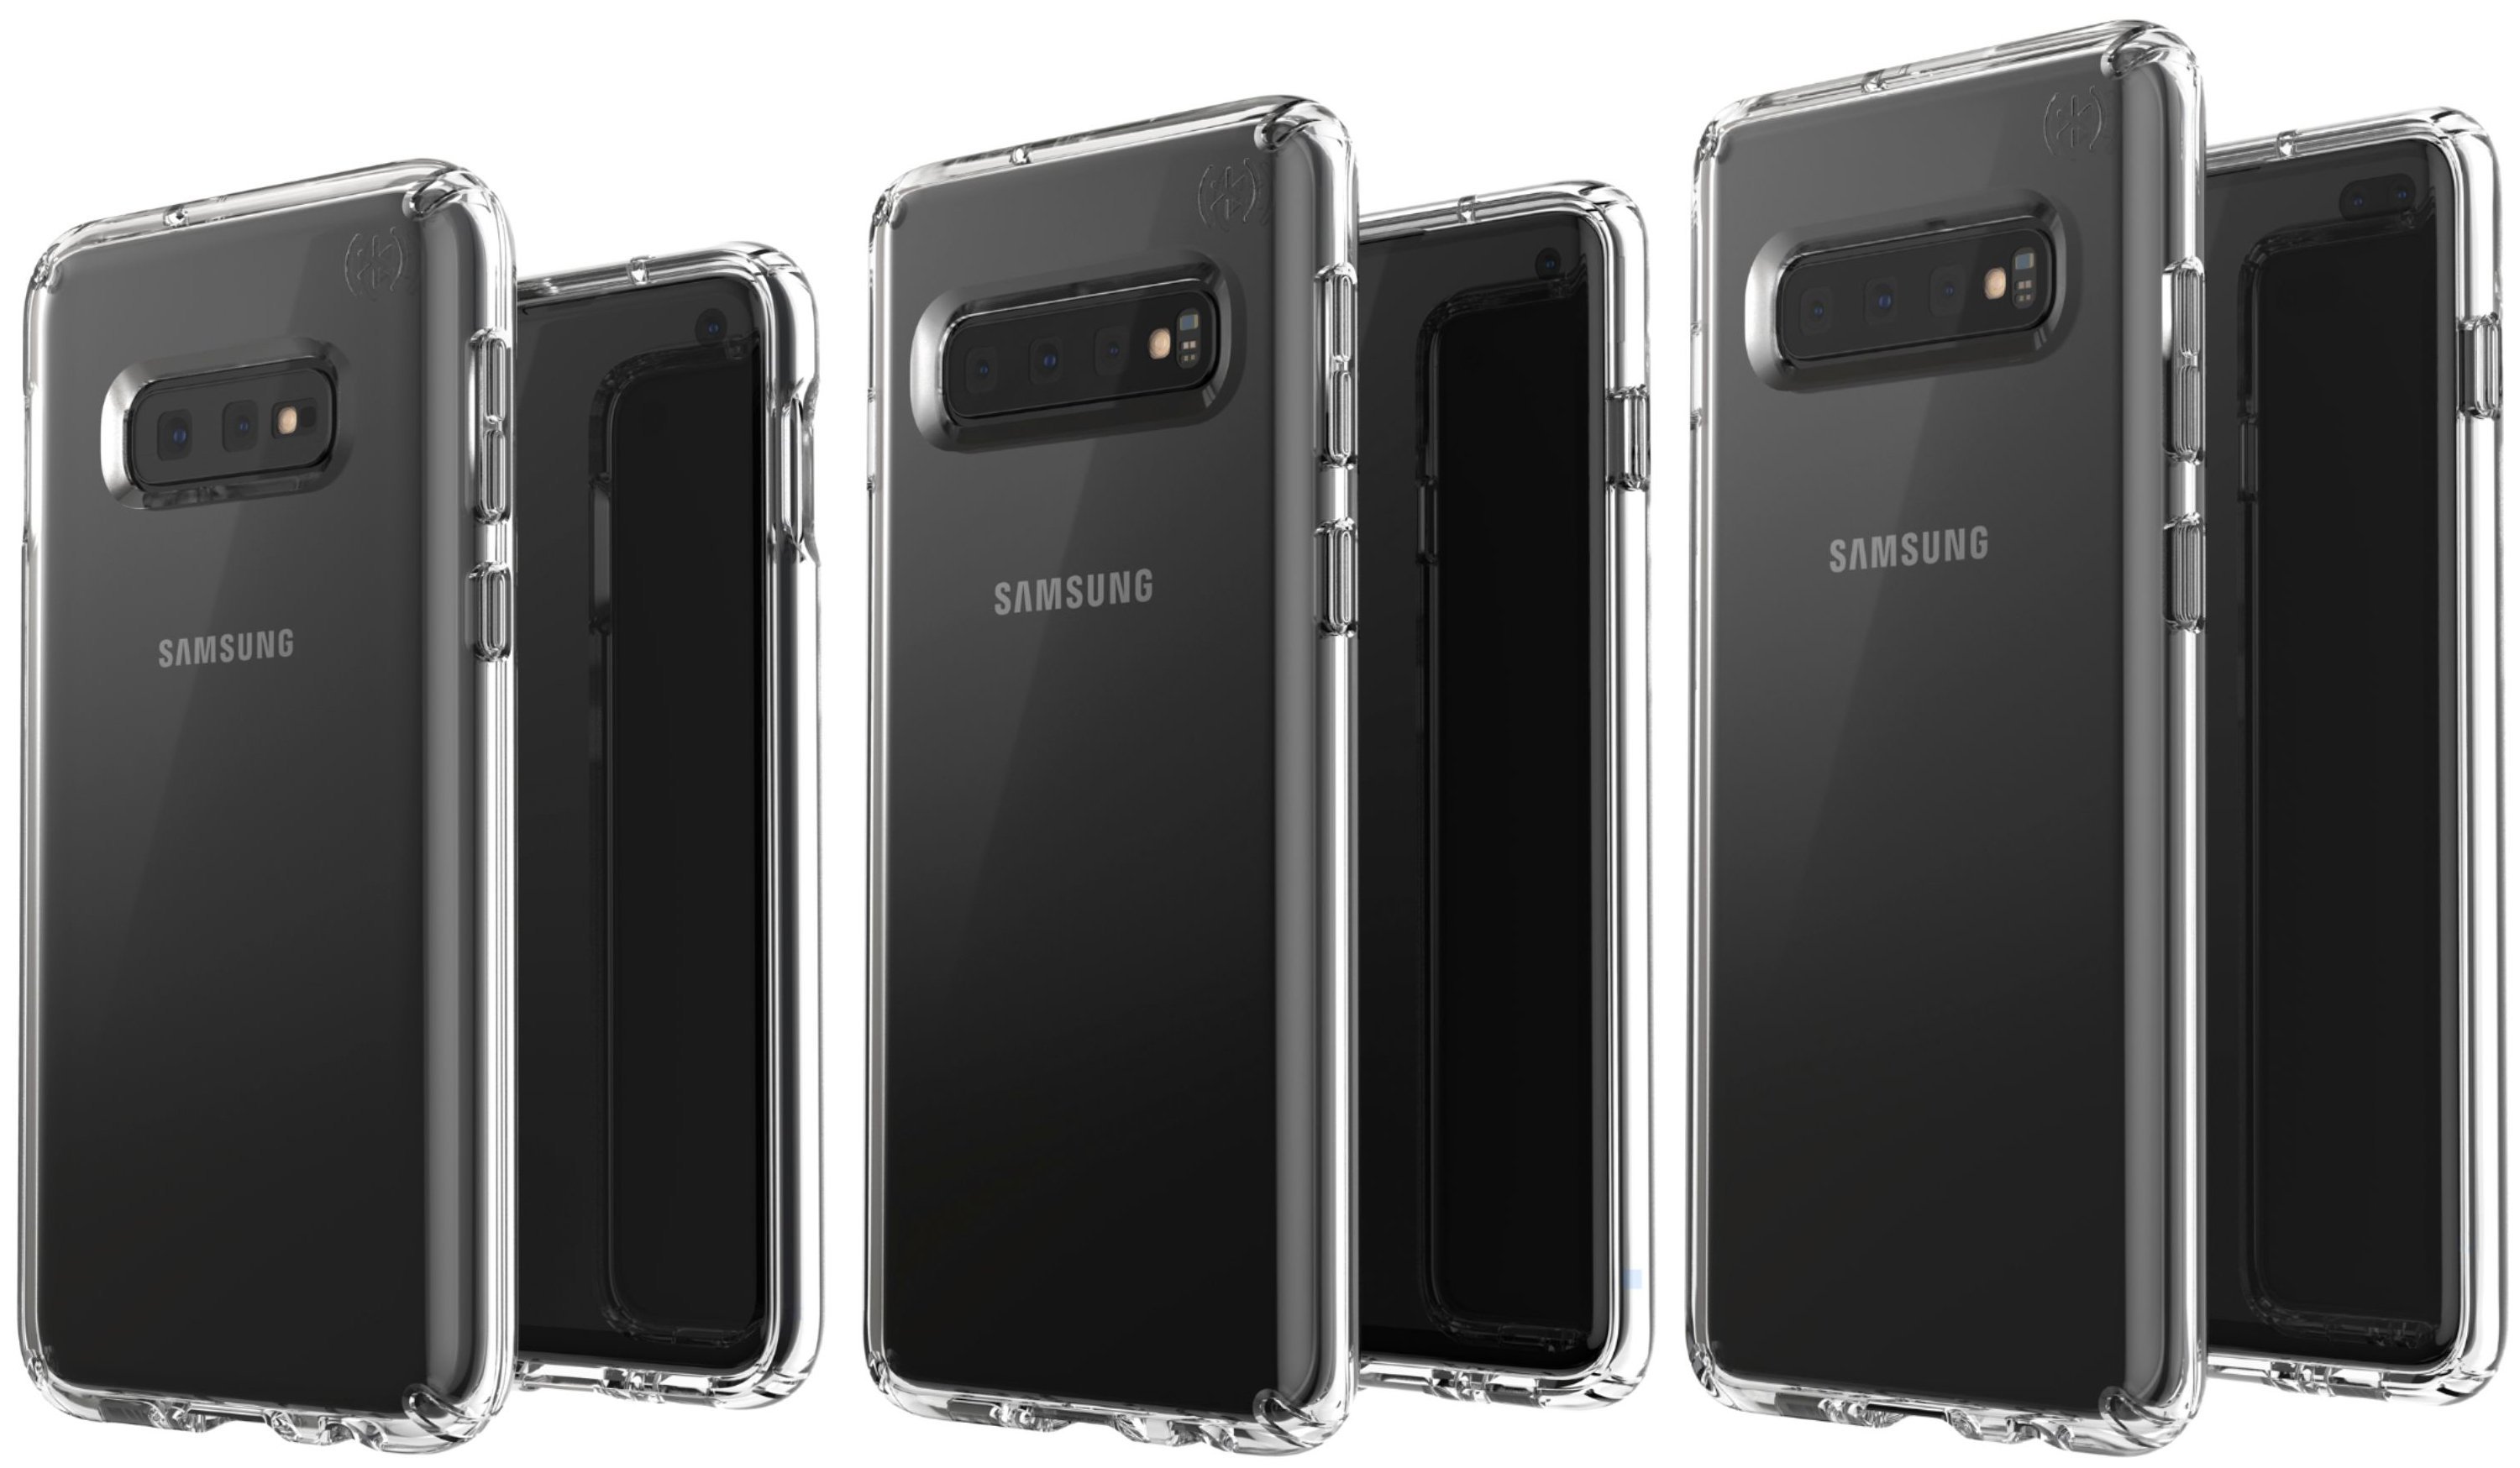 All Three Samsung Galaxy S10 Design Got Leaked